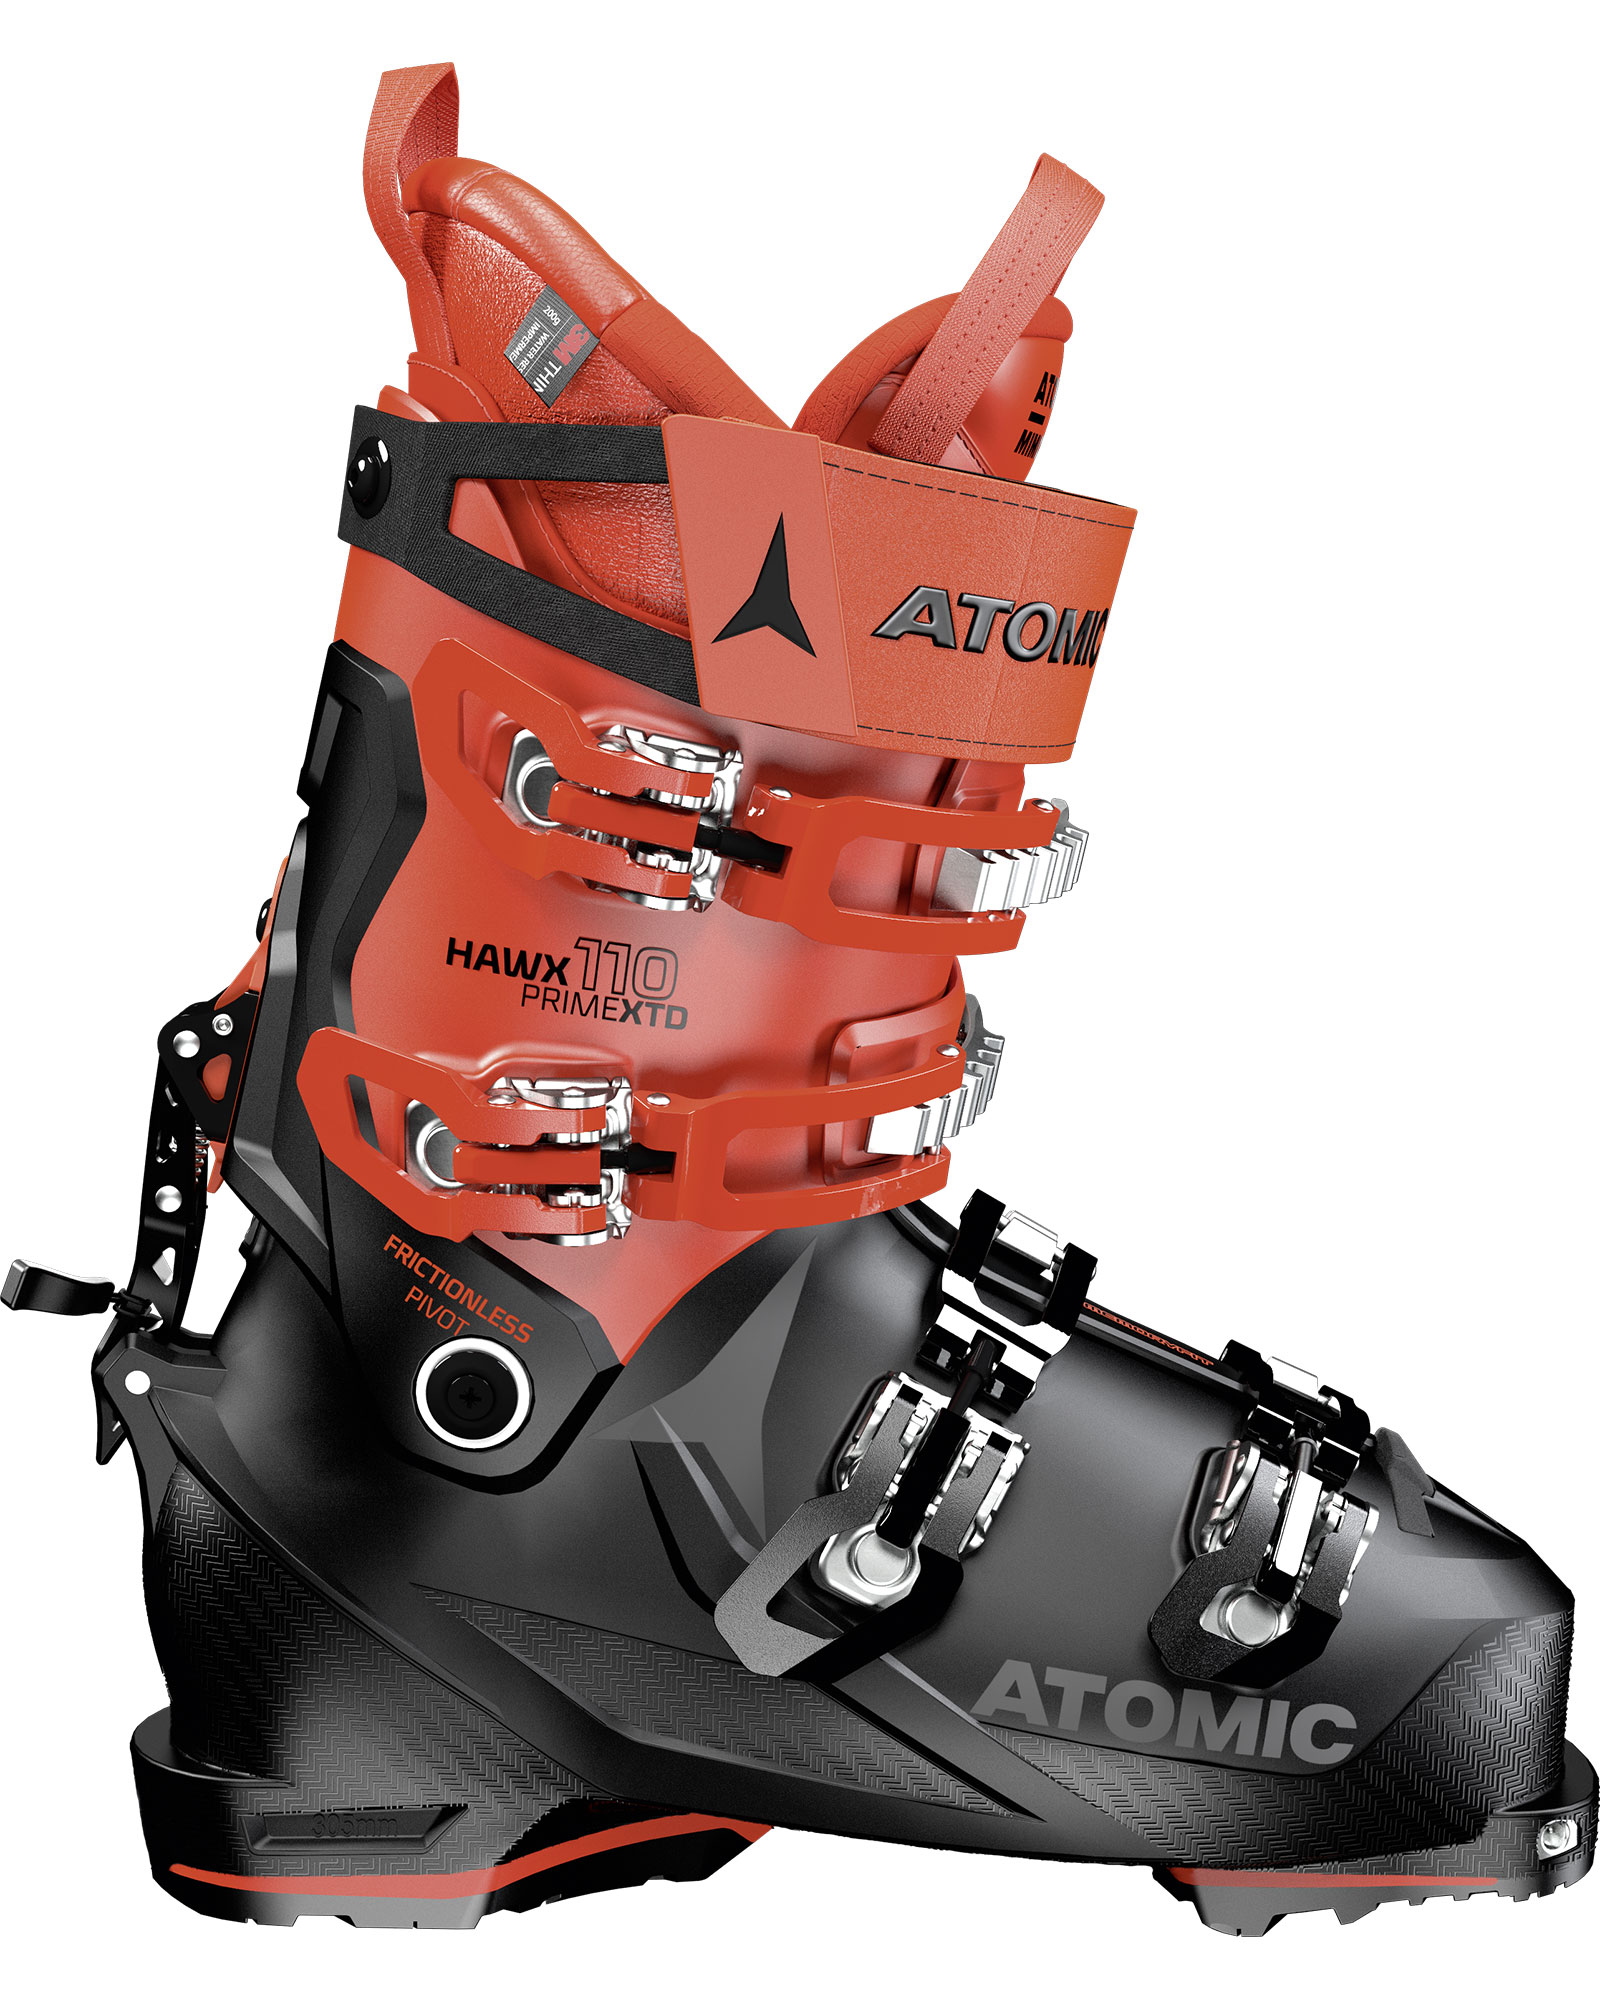 Atomic Hawx Prime XTD 110 CT GW Men’s Ski Boots 2023 - Black/Red MP 29.0